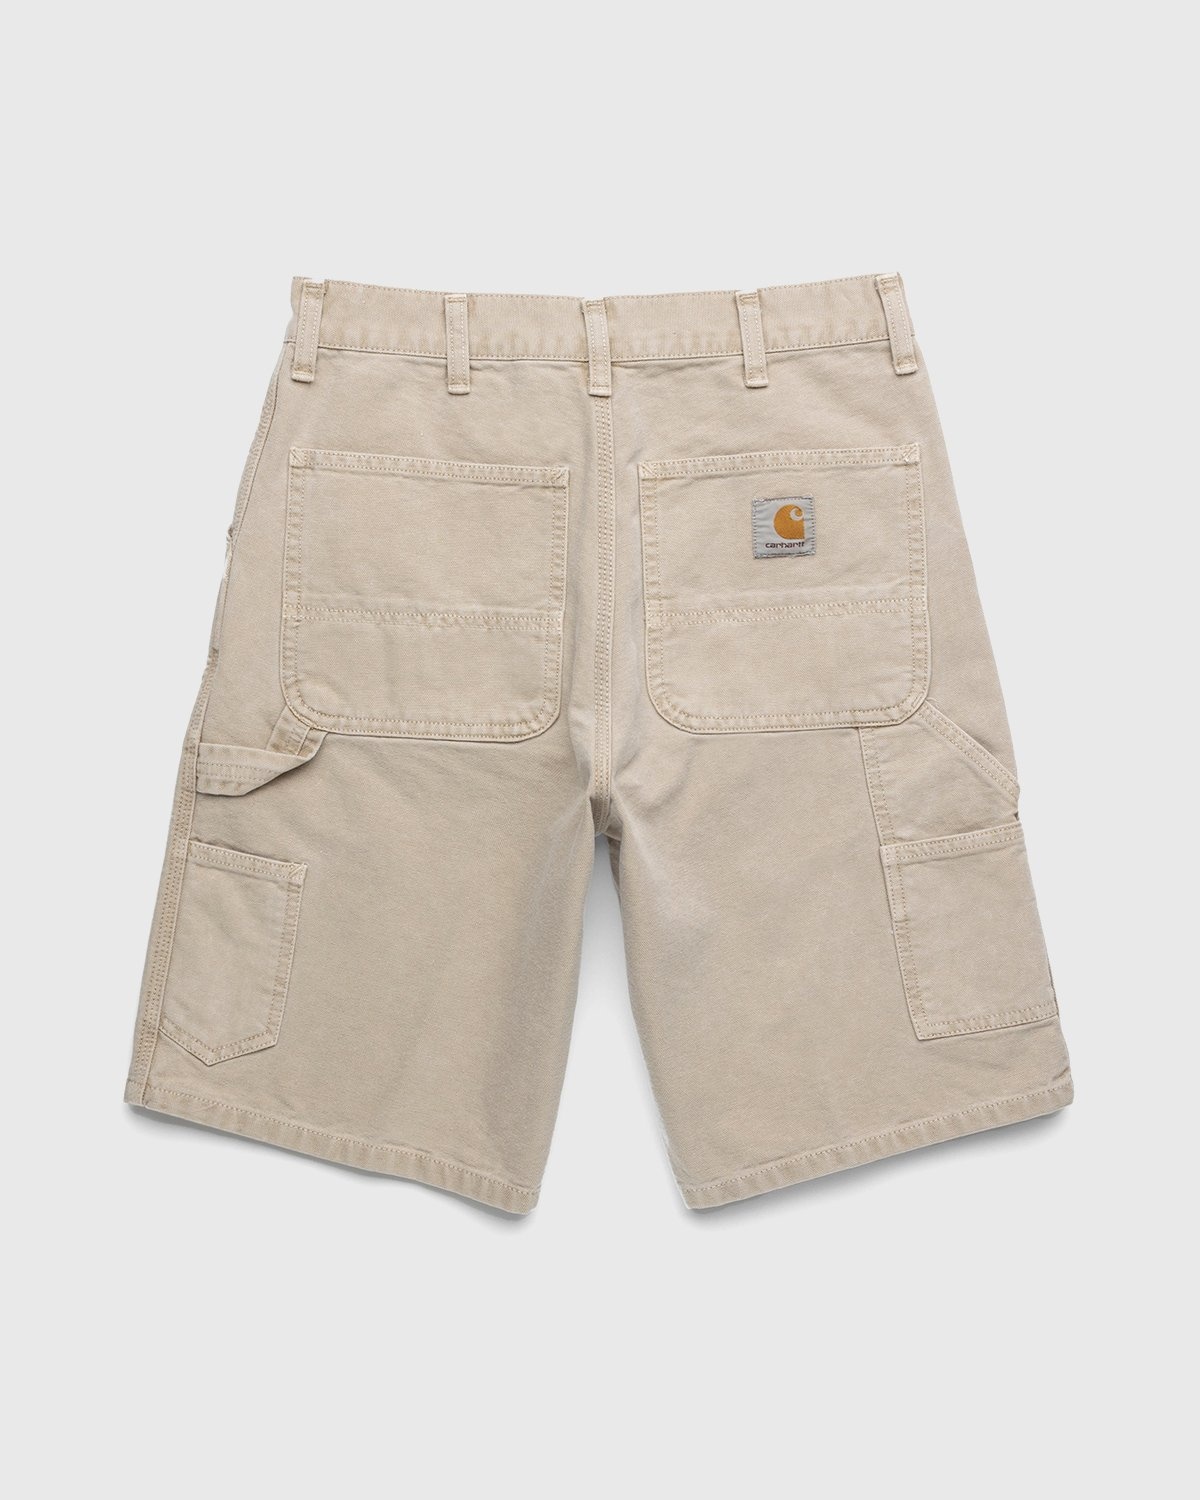 Carhartt WIP – Single Knee Short Dusty H Brown - Shorts - Brown - Image 2